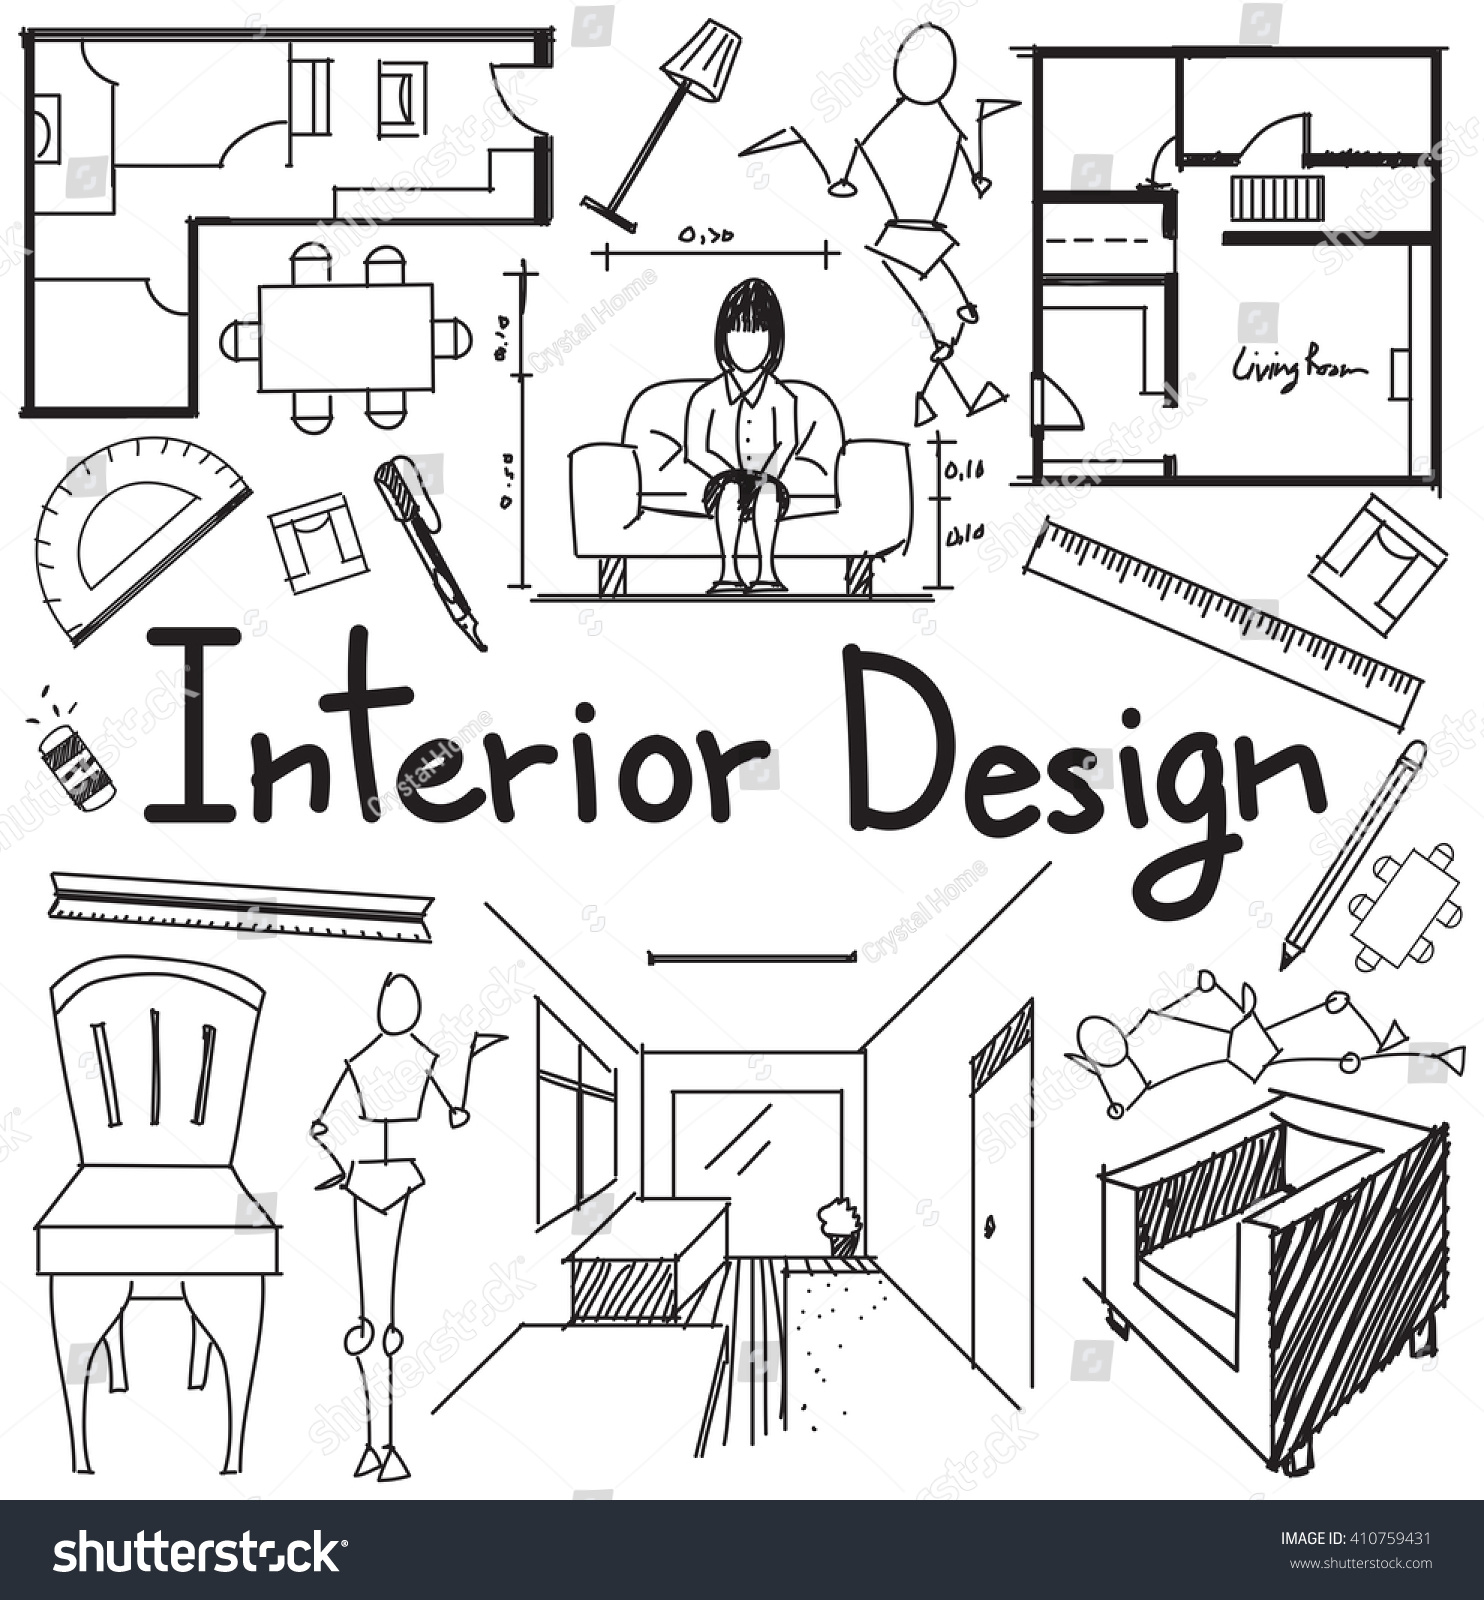 Interior Design Building Blueprint Profession Education